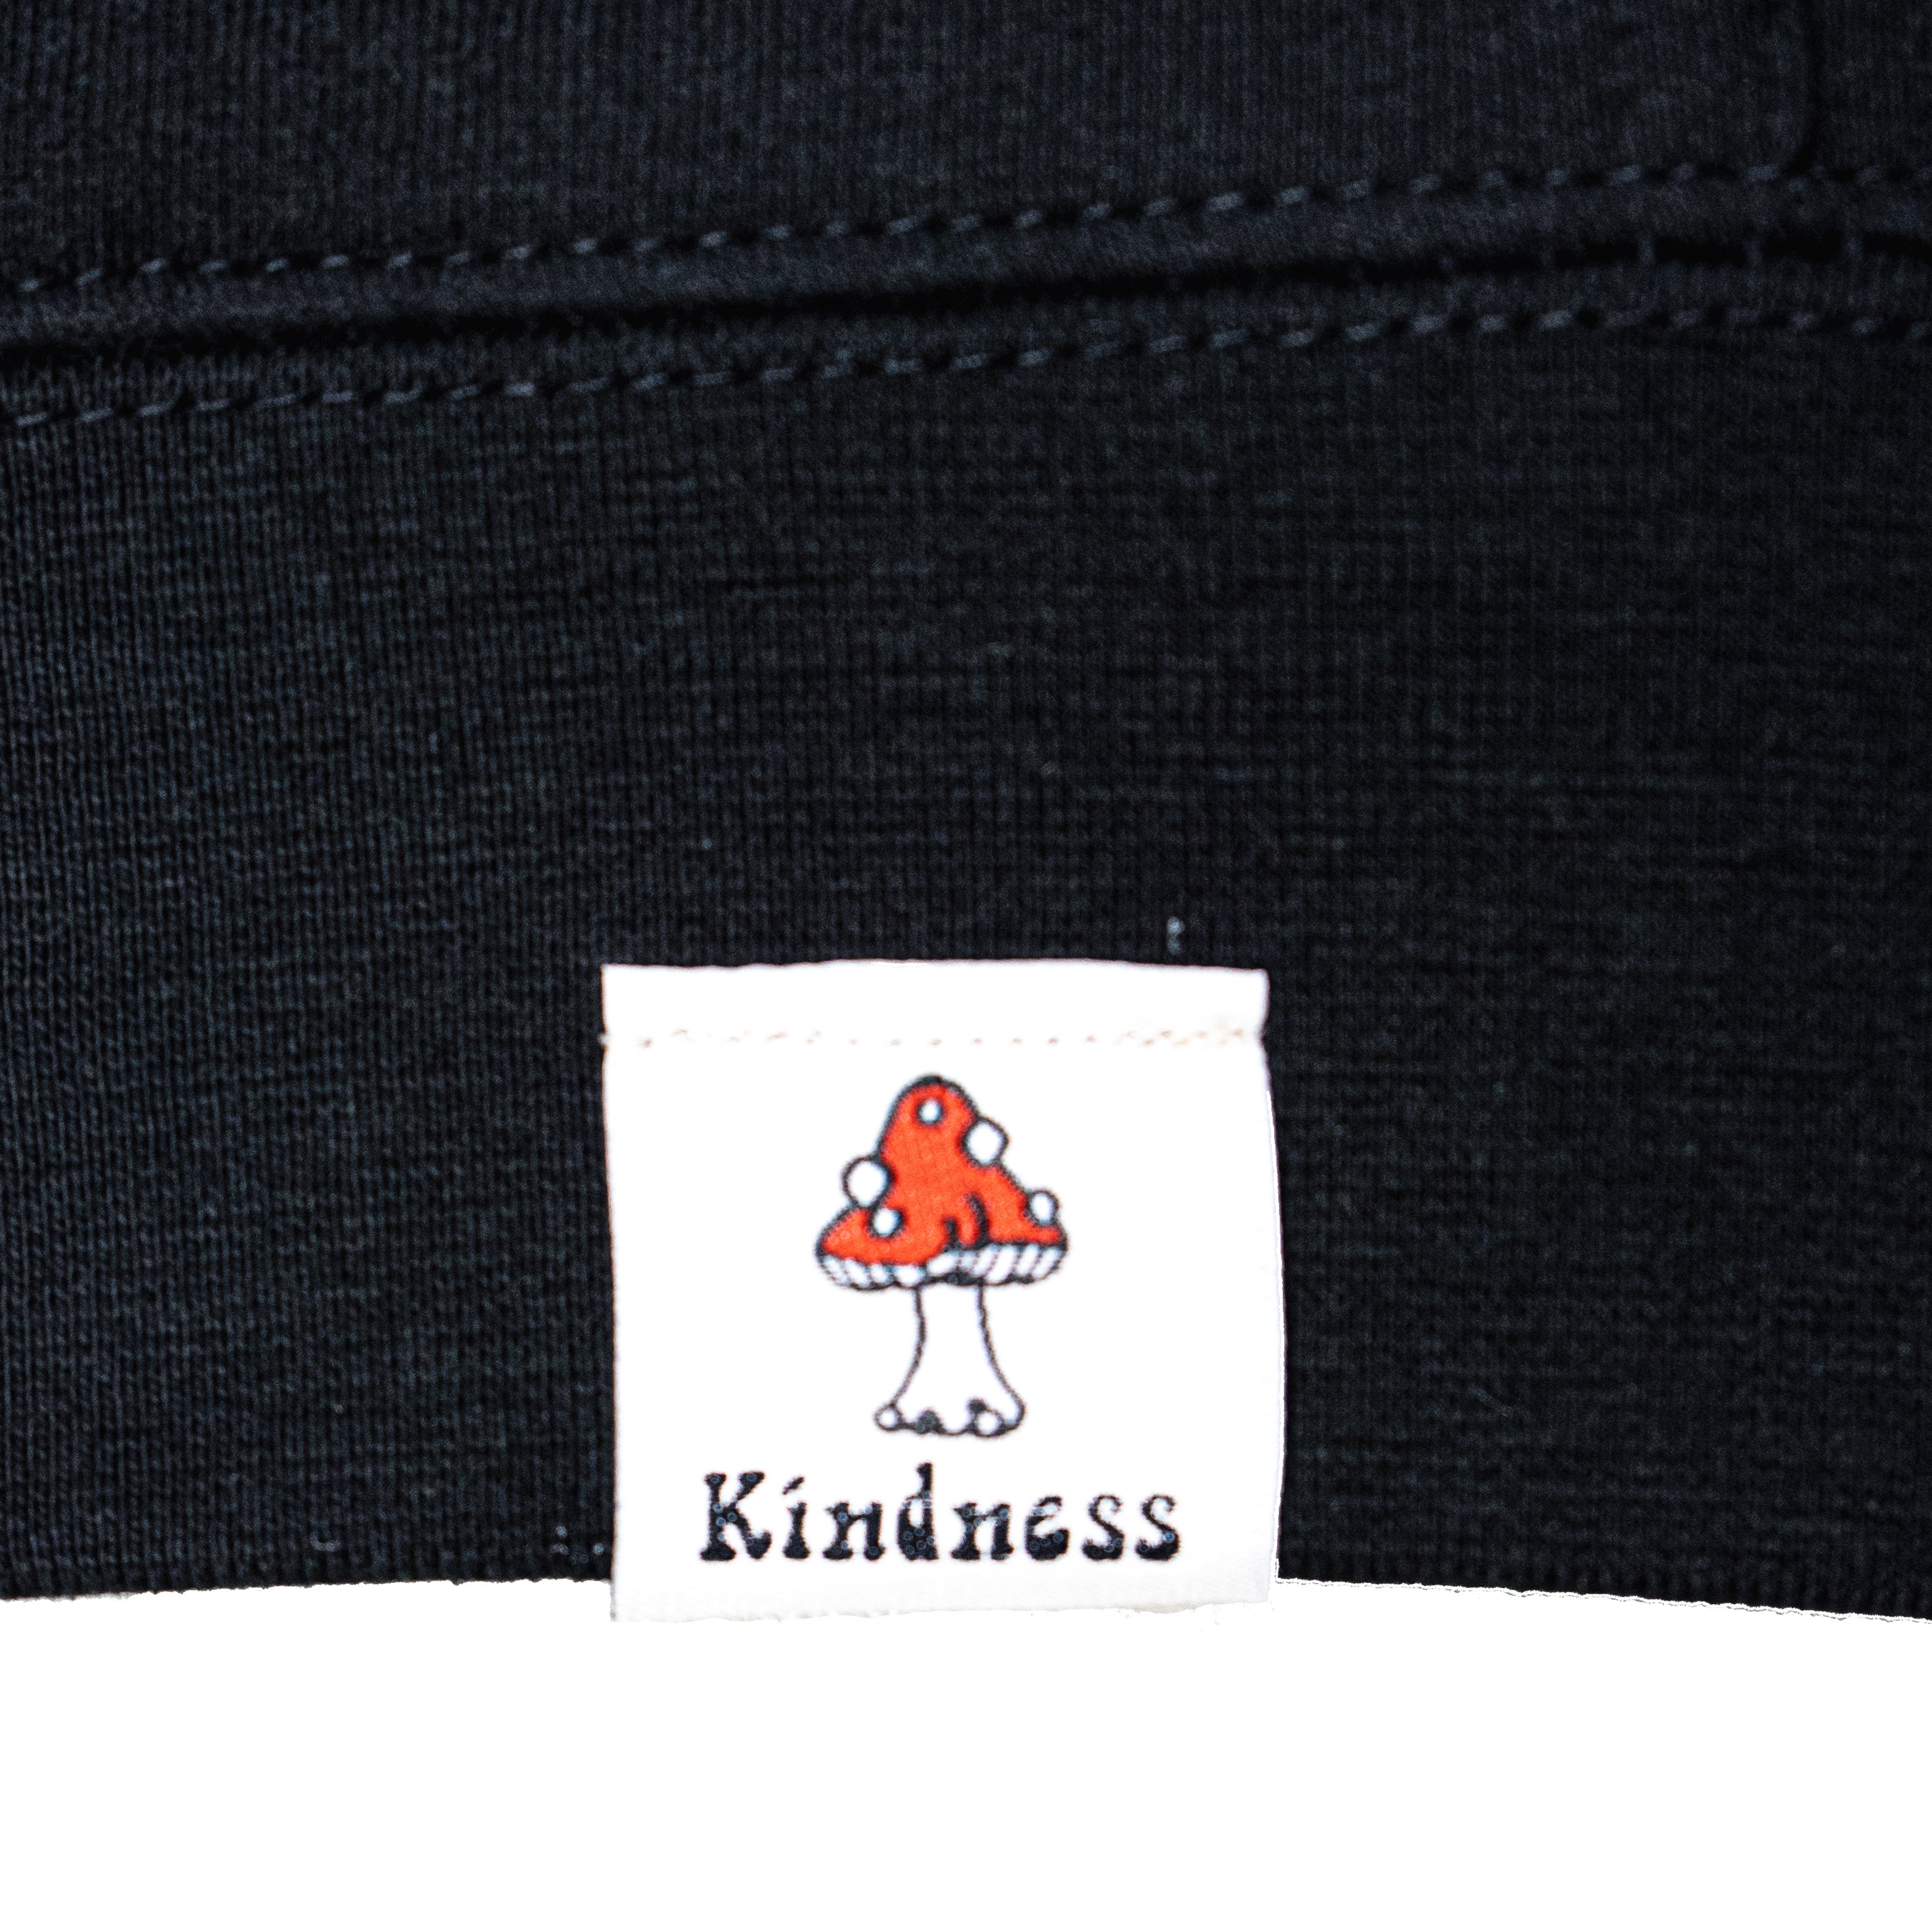 SALE - The Kindness "Magic" Hood Sweatshirt Black